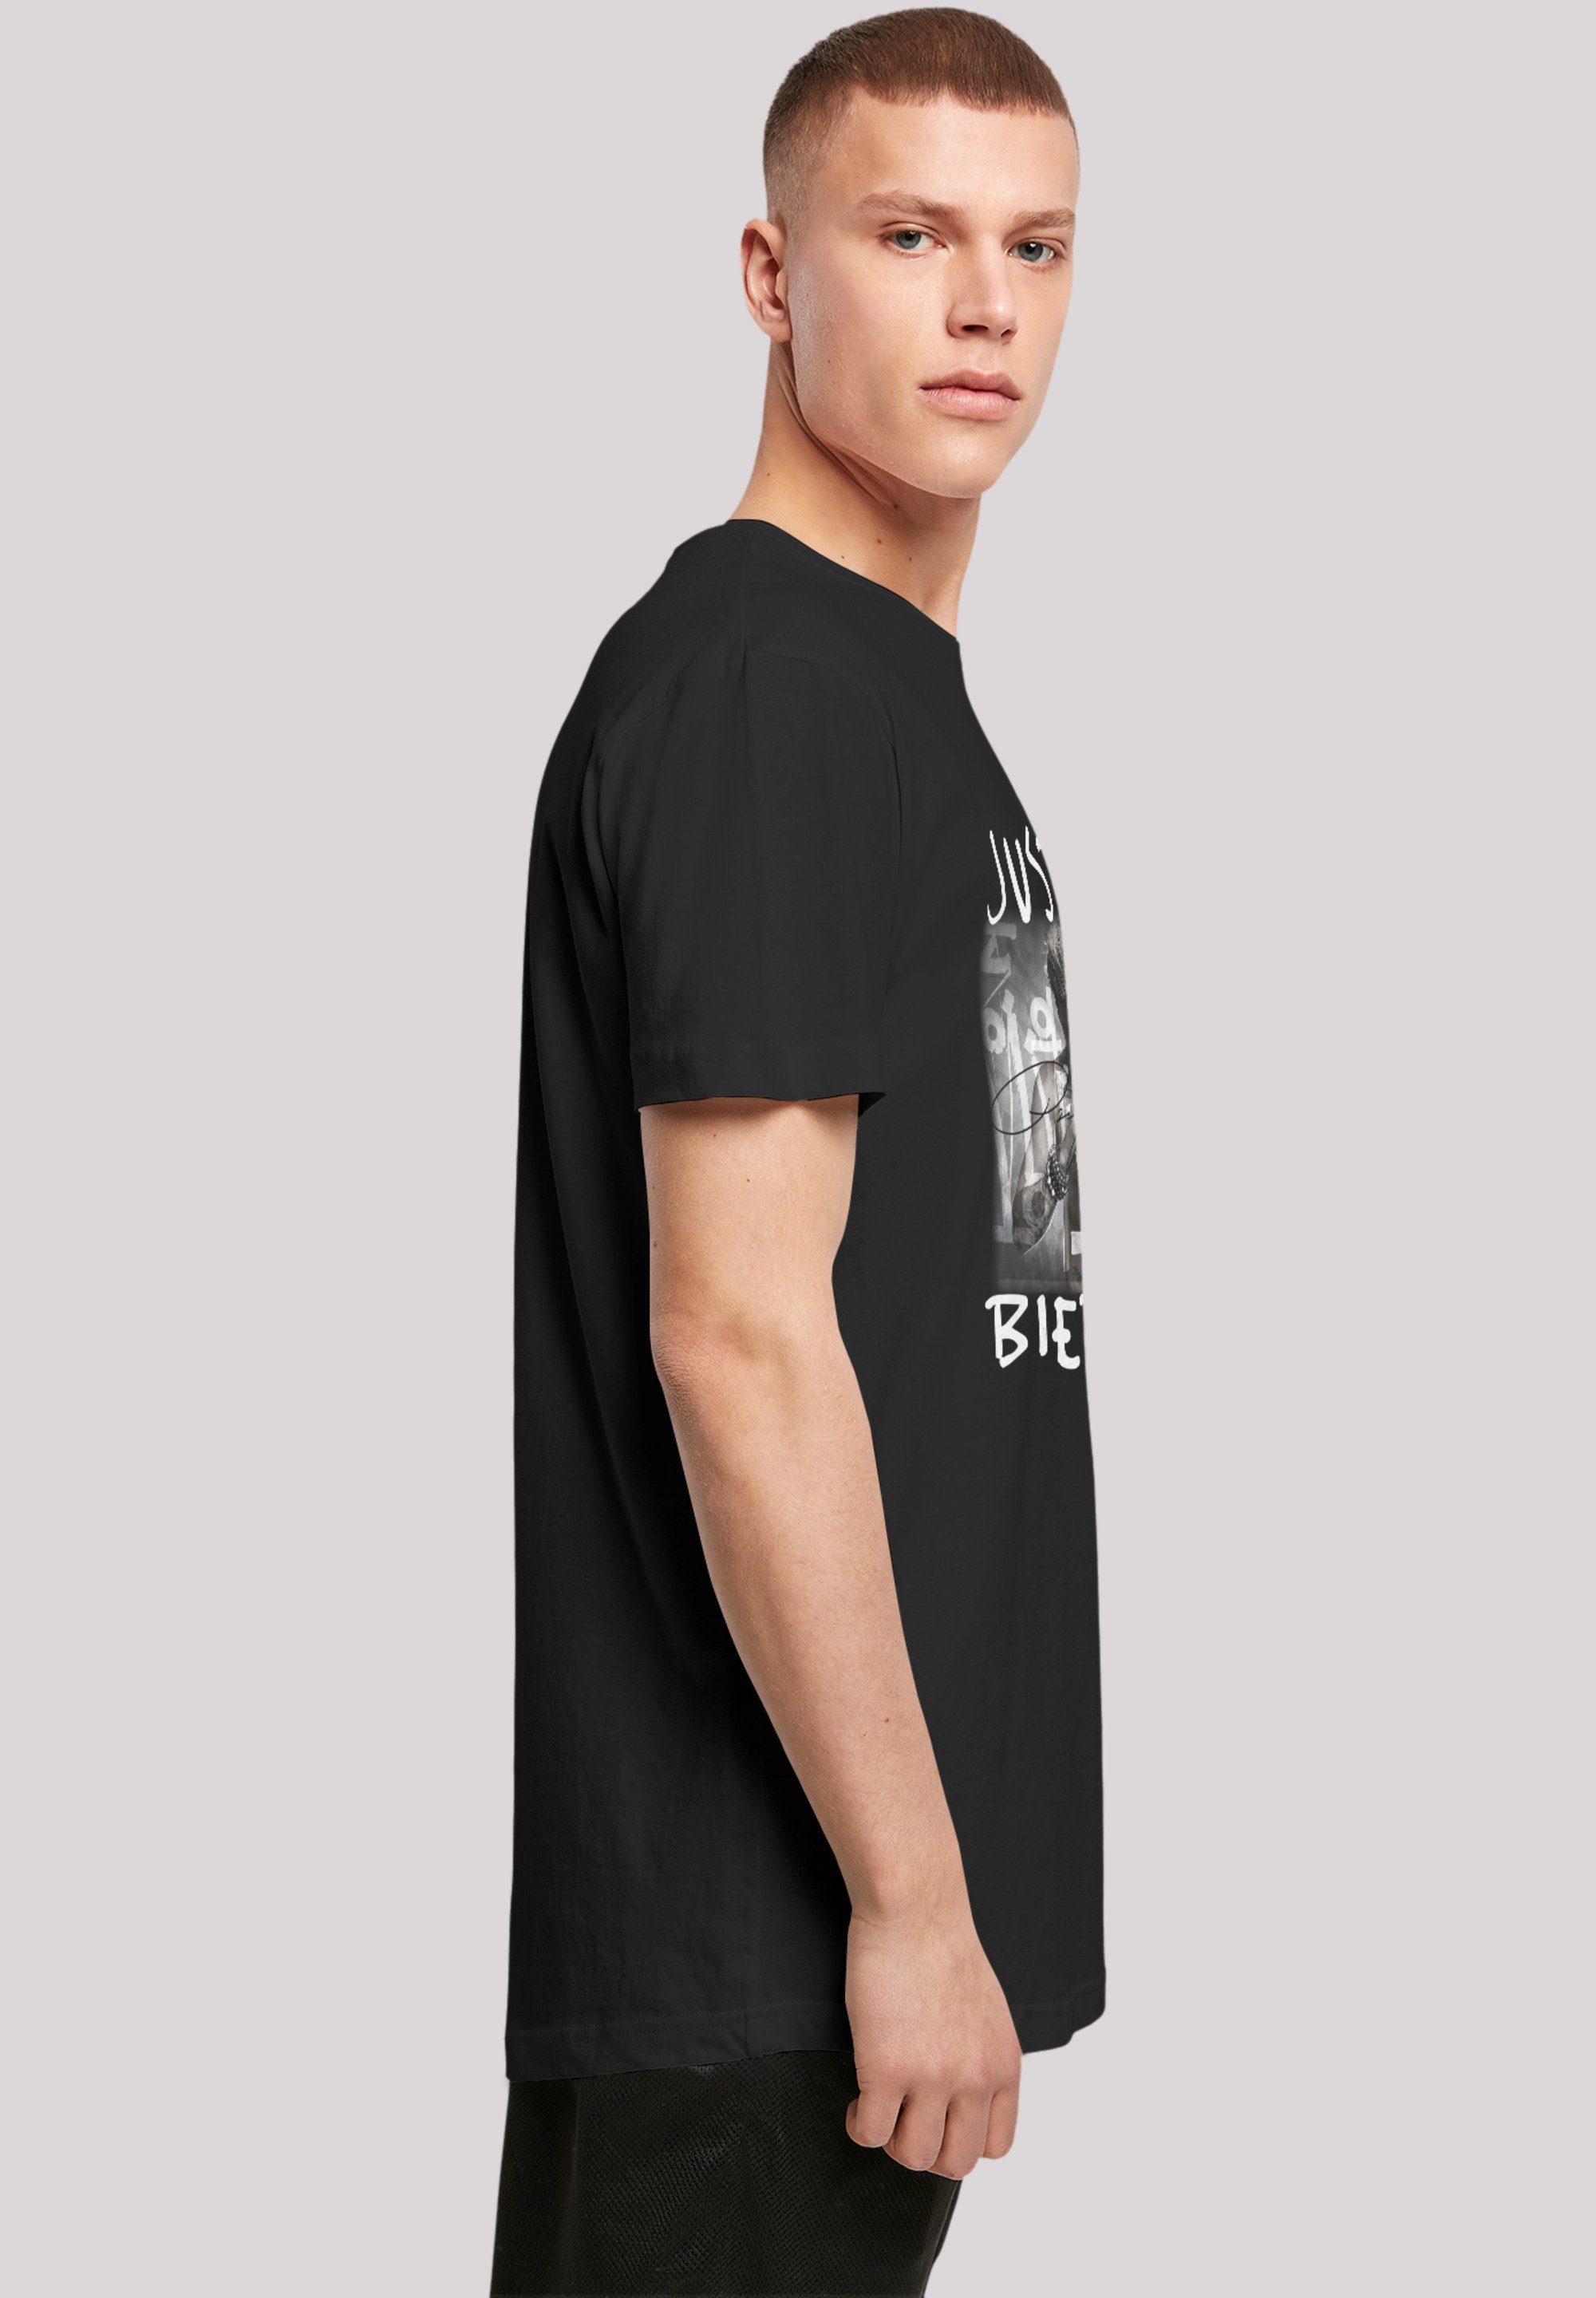 F4NT4STIC Justin Album Bieber Rock By Qualität, Cover Premium Off T-Shirt Musik, Purpose